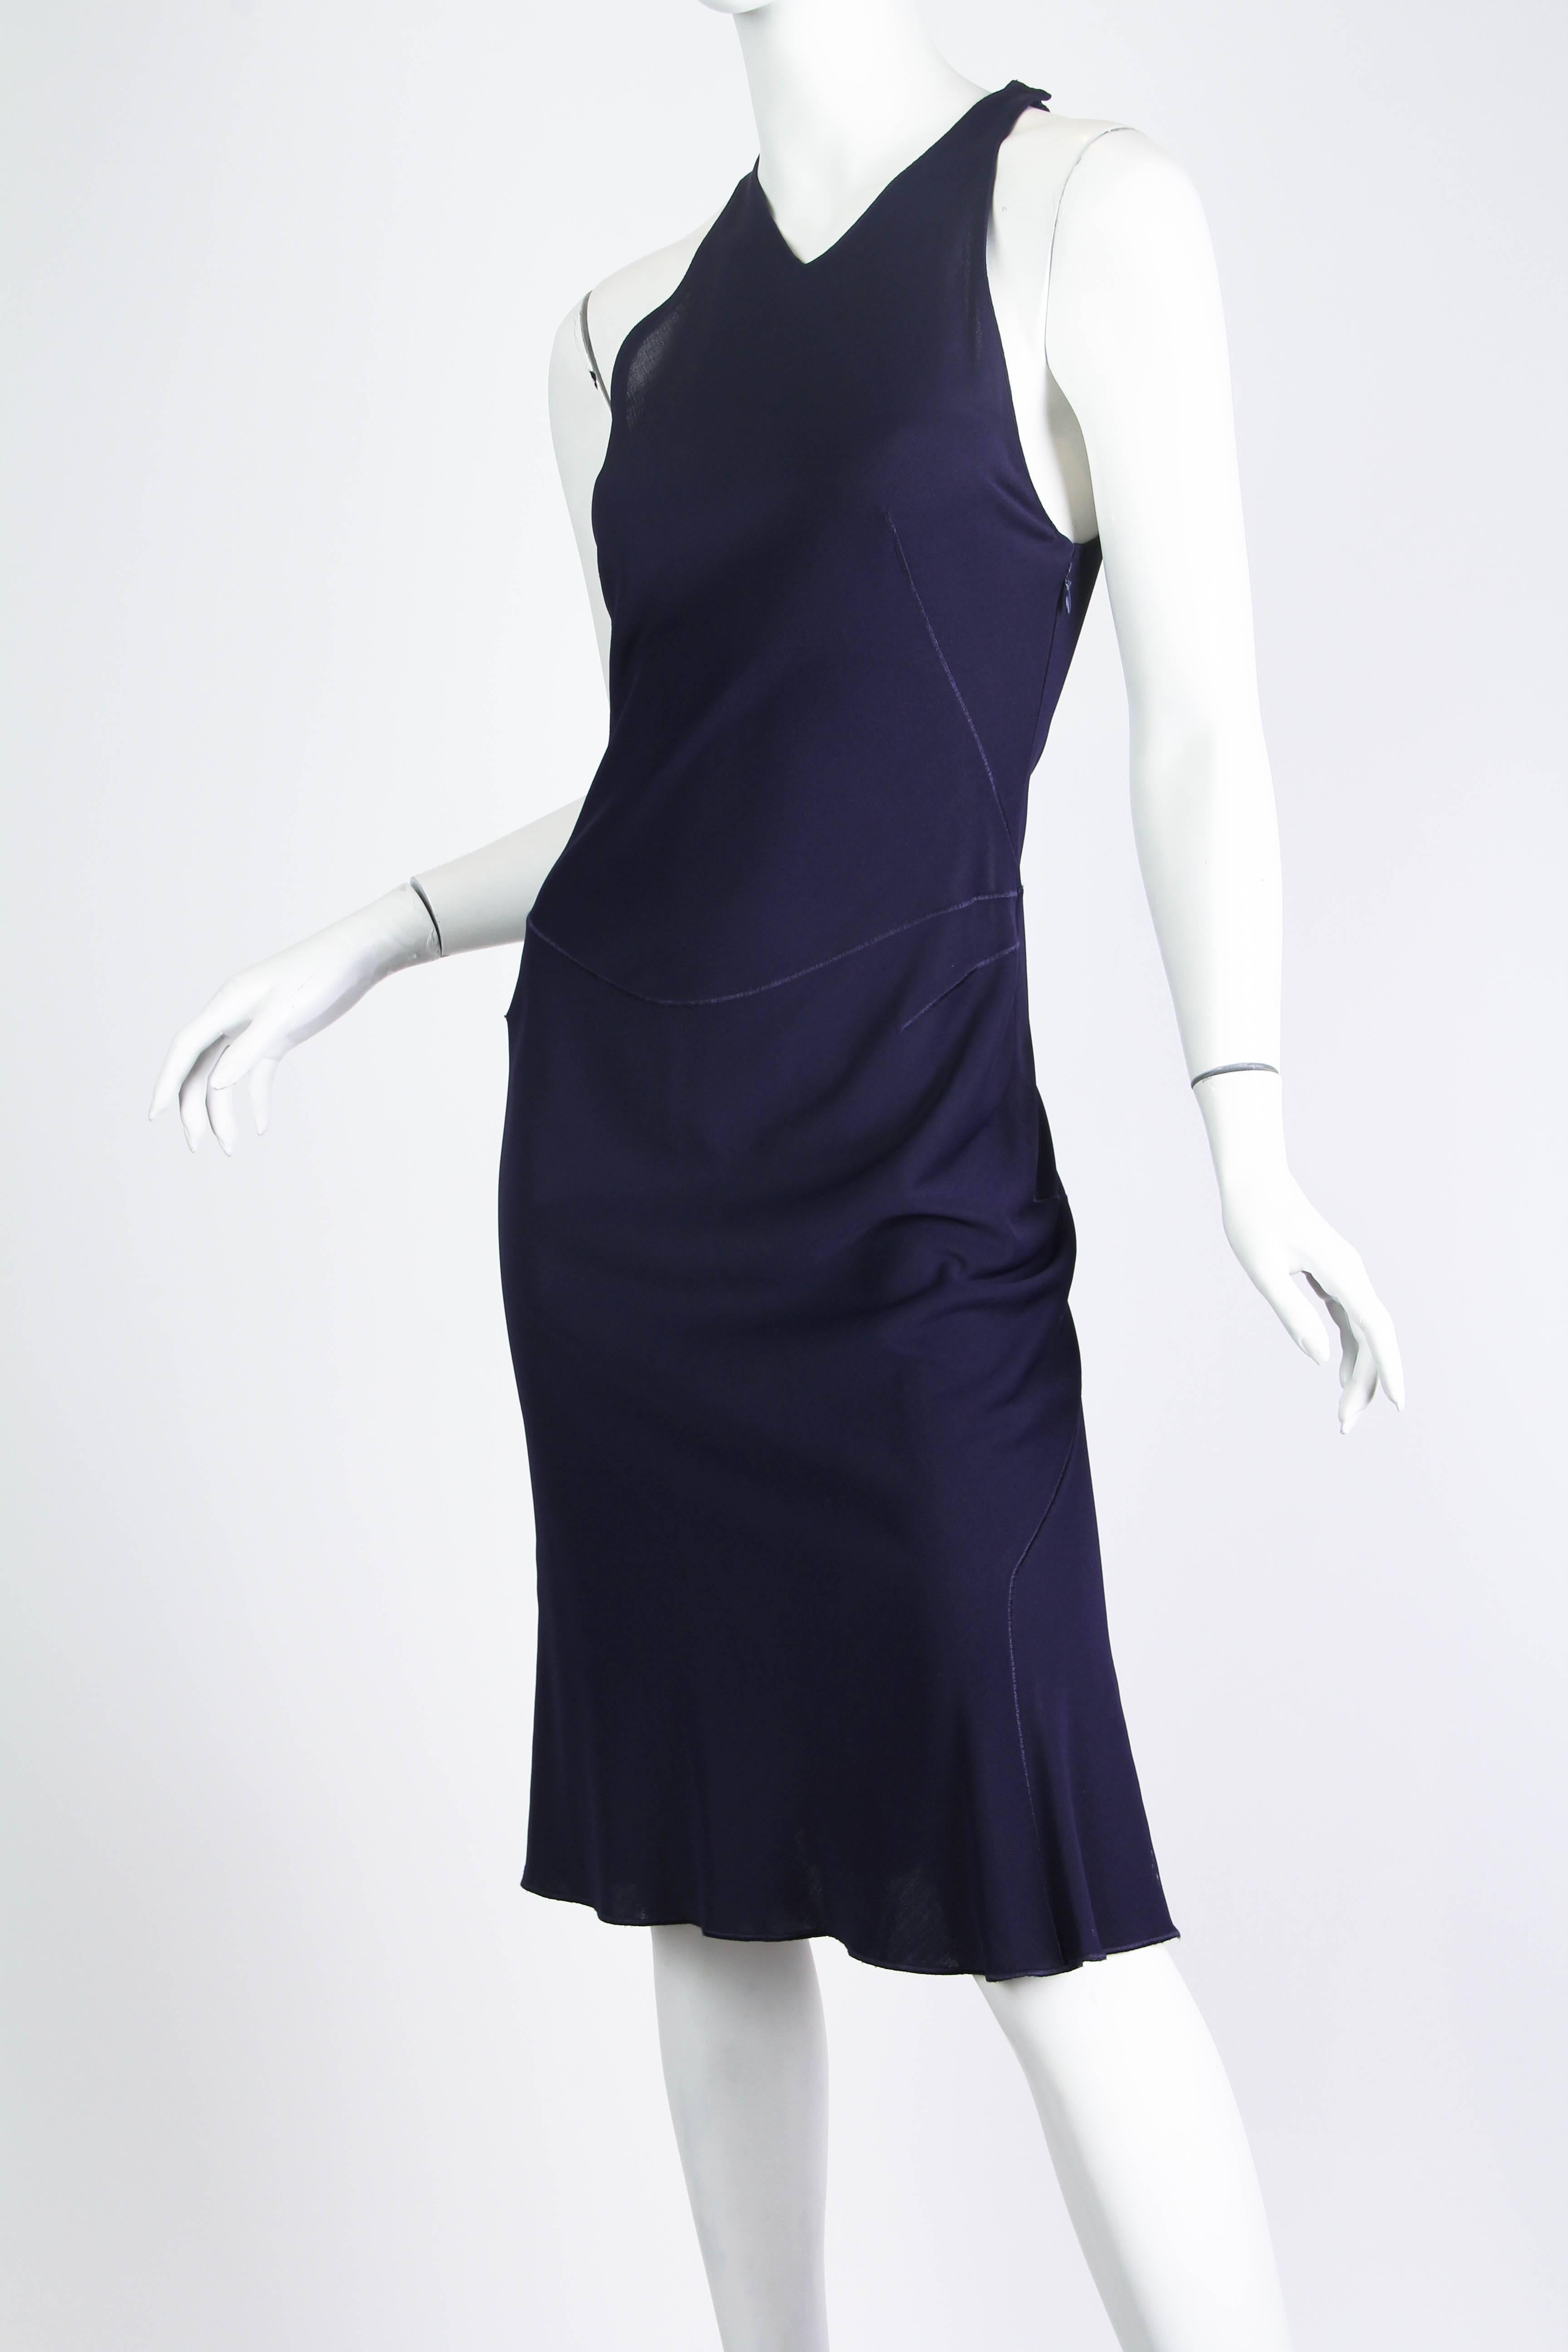 Black 1980S AZZEDINE ALAIA Navy Blue Rayon Jersey Body-Con Cocktail Dress For Sale